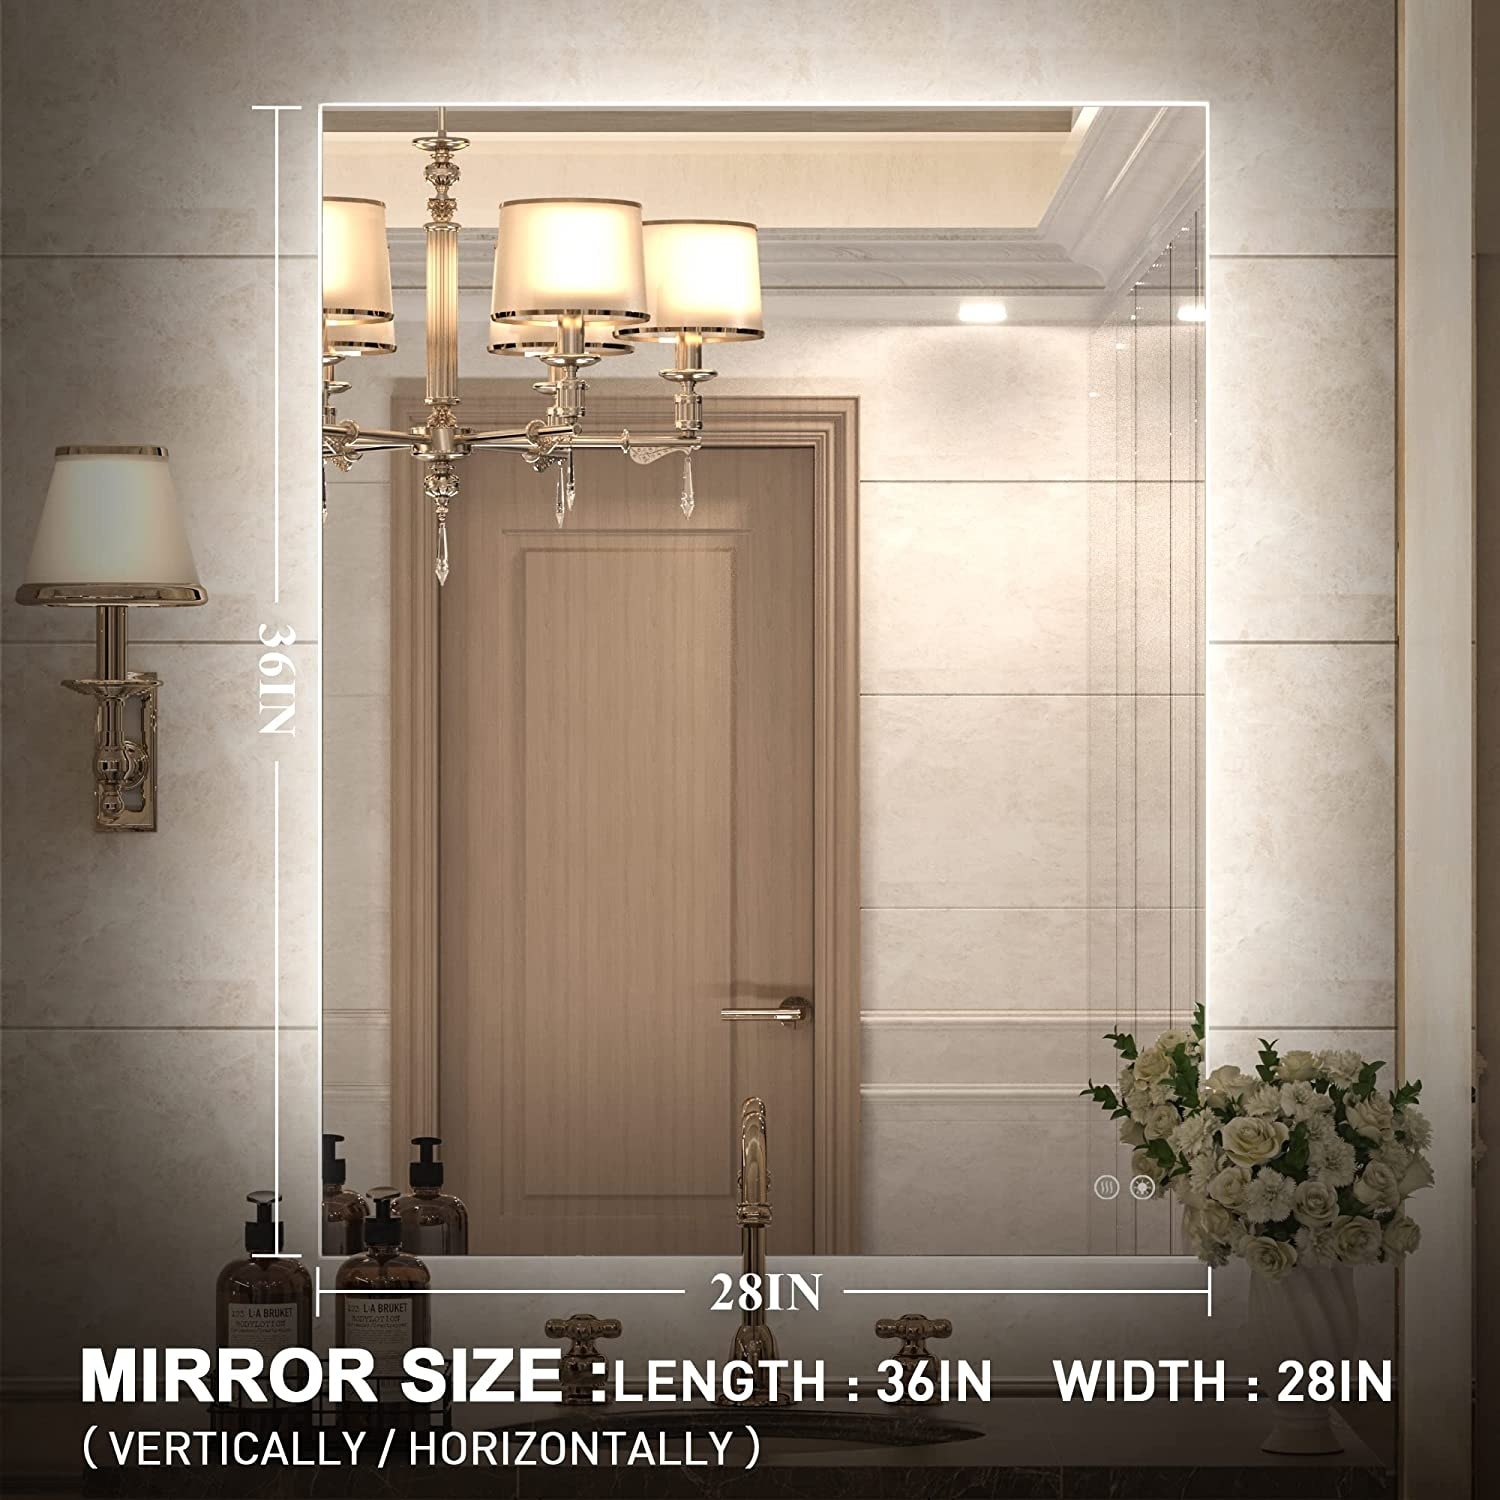 TokeShimi LED Backlit Bathroom Vanity Mirror, Anti-Fog Wall Mounted Dimmable  Makeup Mirror On Sale Bed Bath  Beyond 35479275